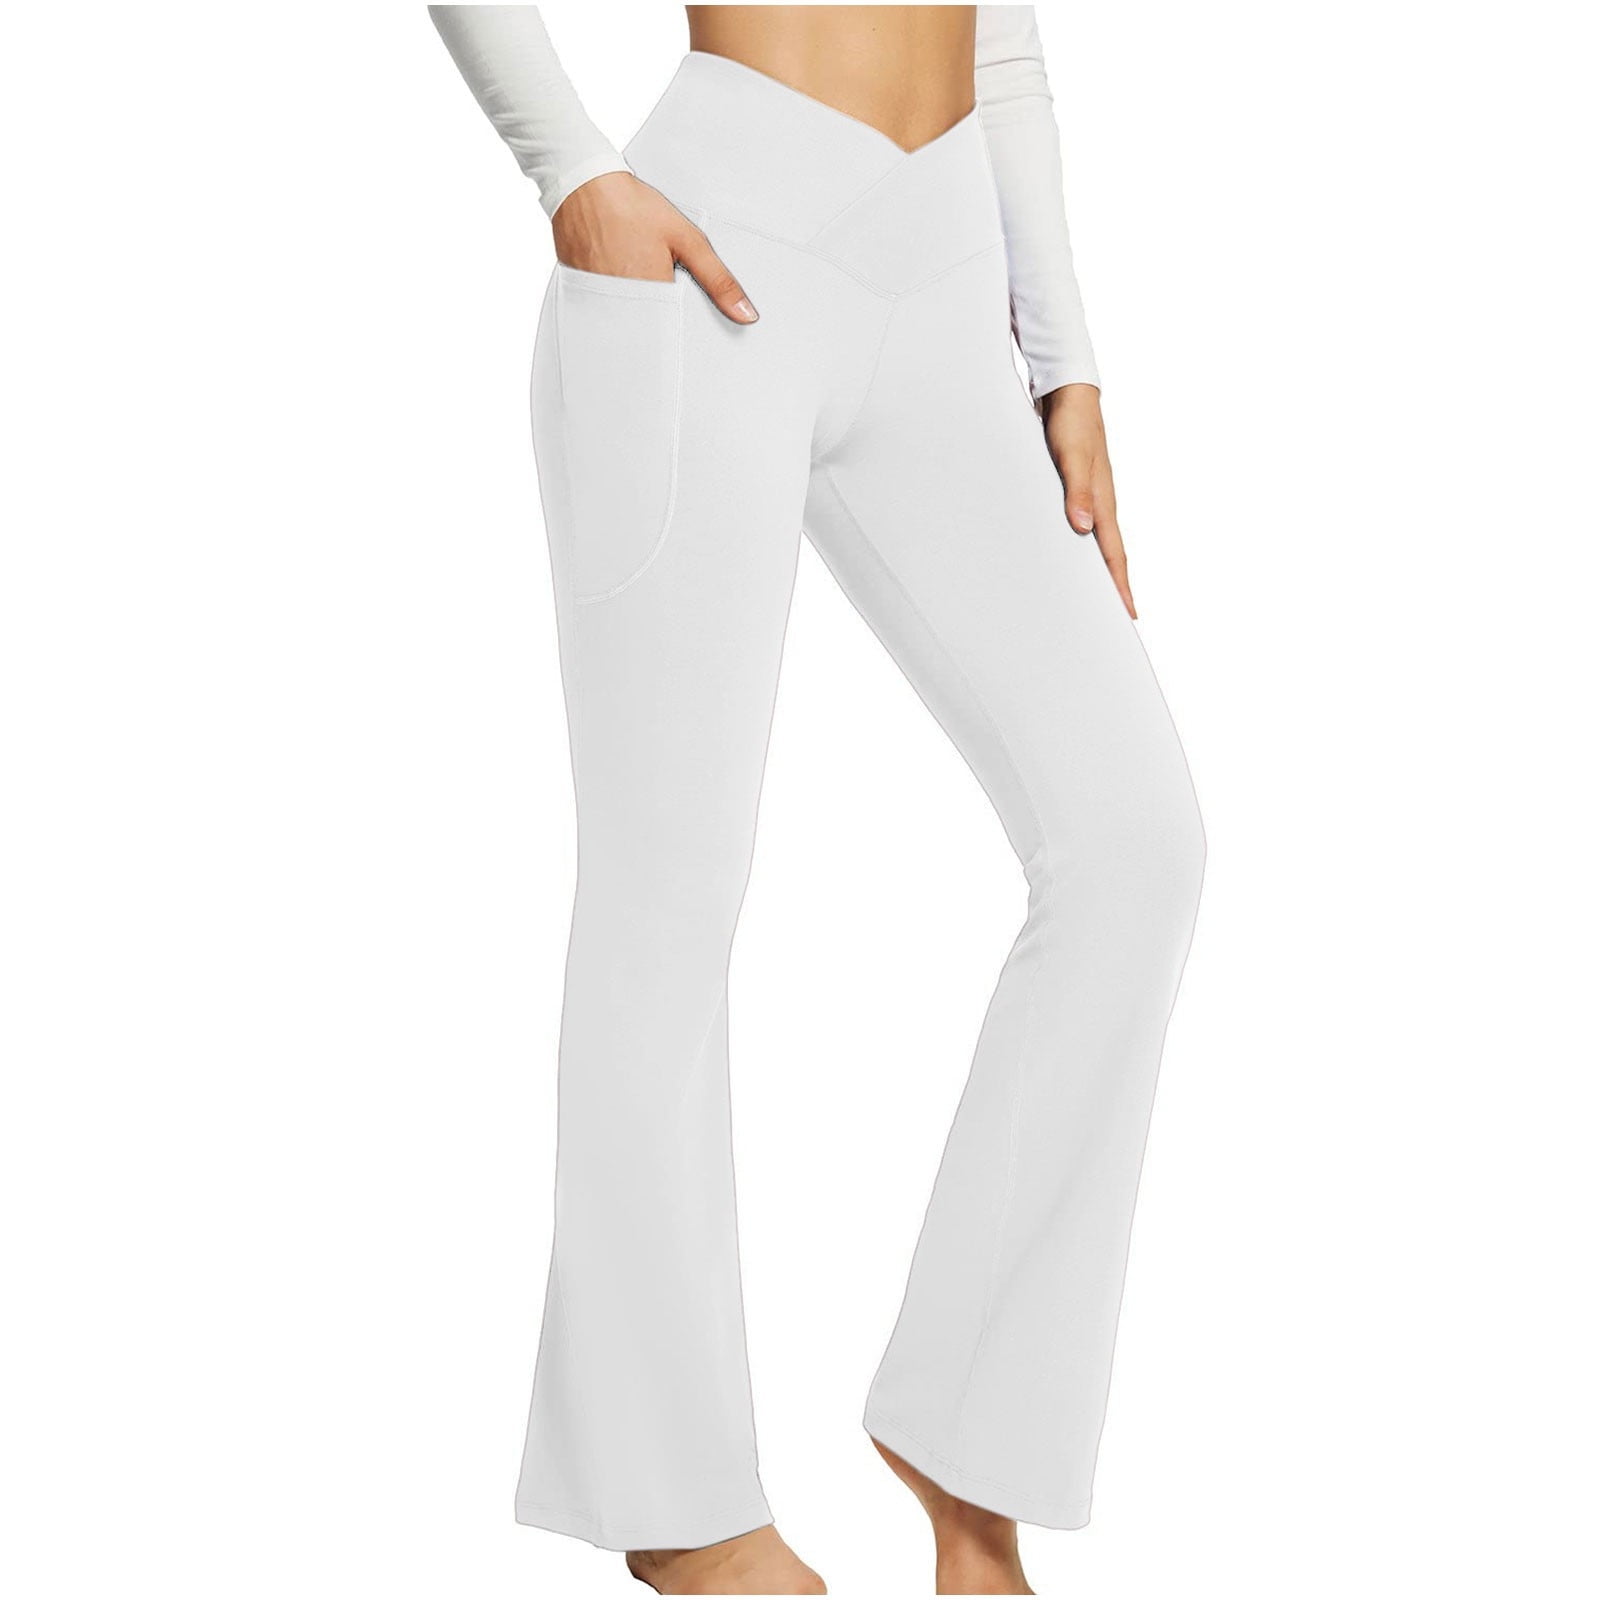 Scyoekwg Bell Bottom Pants for Women,Women's Overlap High Waist Flare Leg  Pant Casual Yoga Trousers Workout Stretch Pants Trousers with Pocket White  XXL - Walmart.com